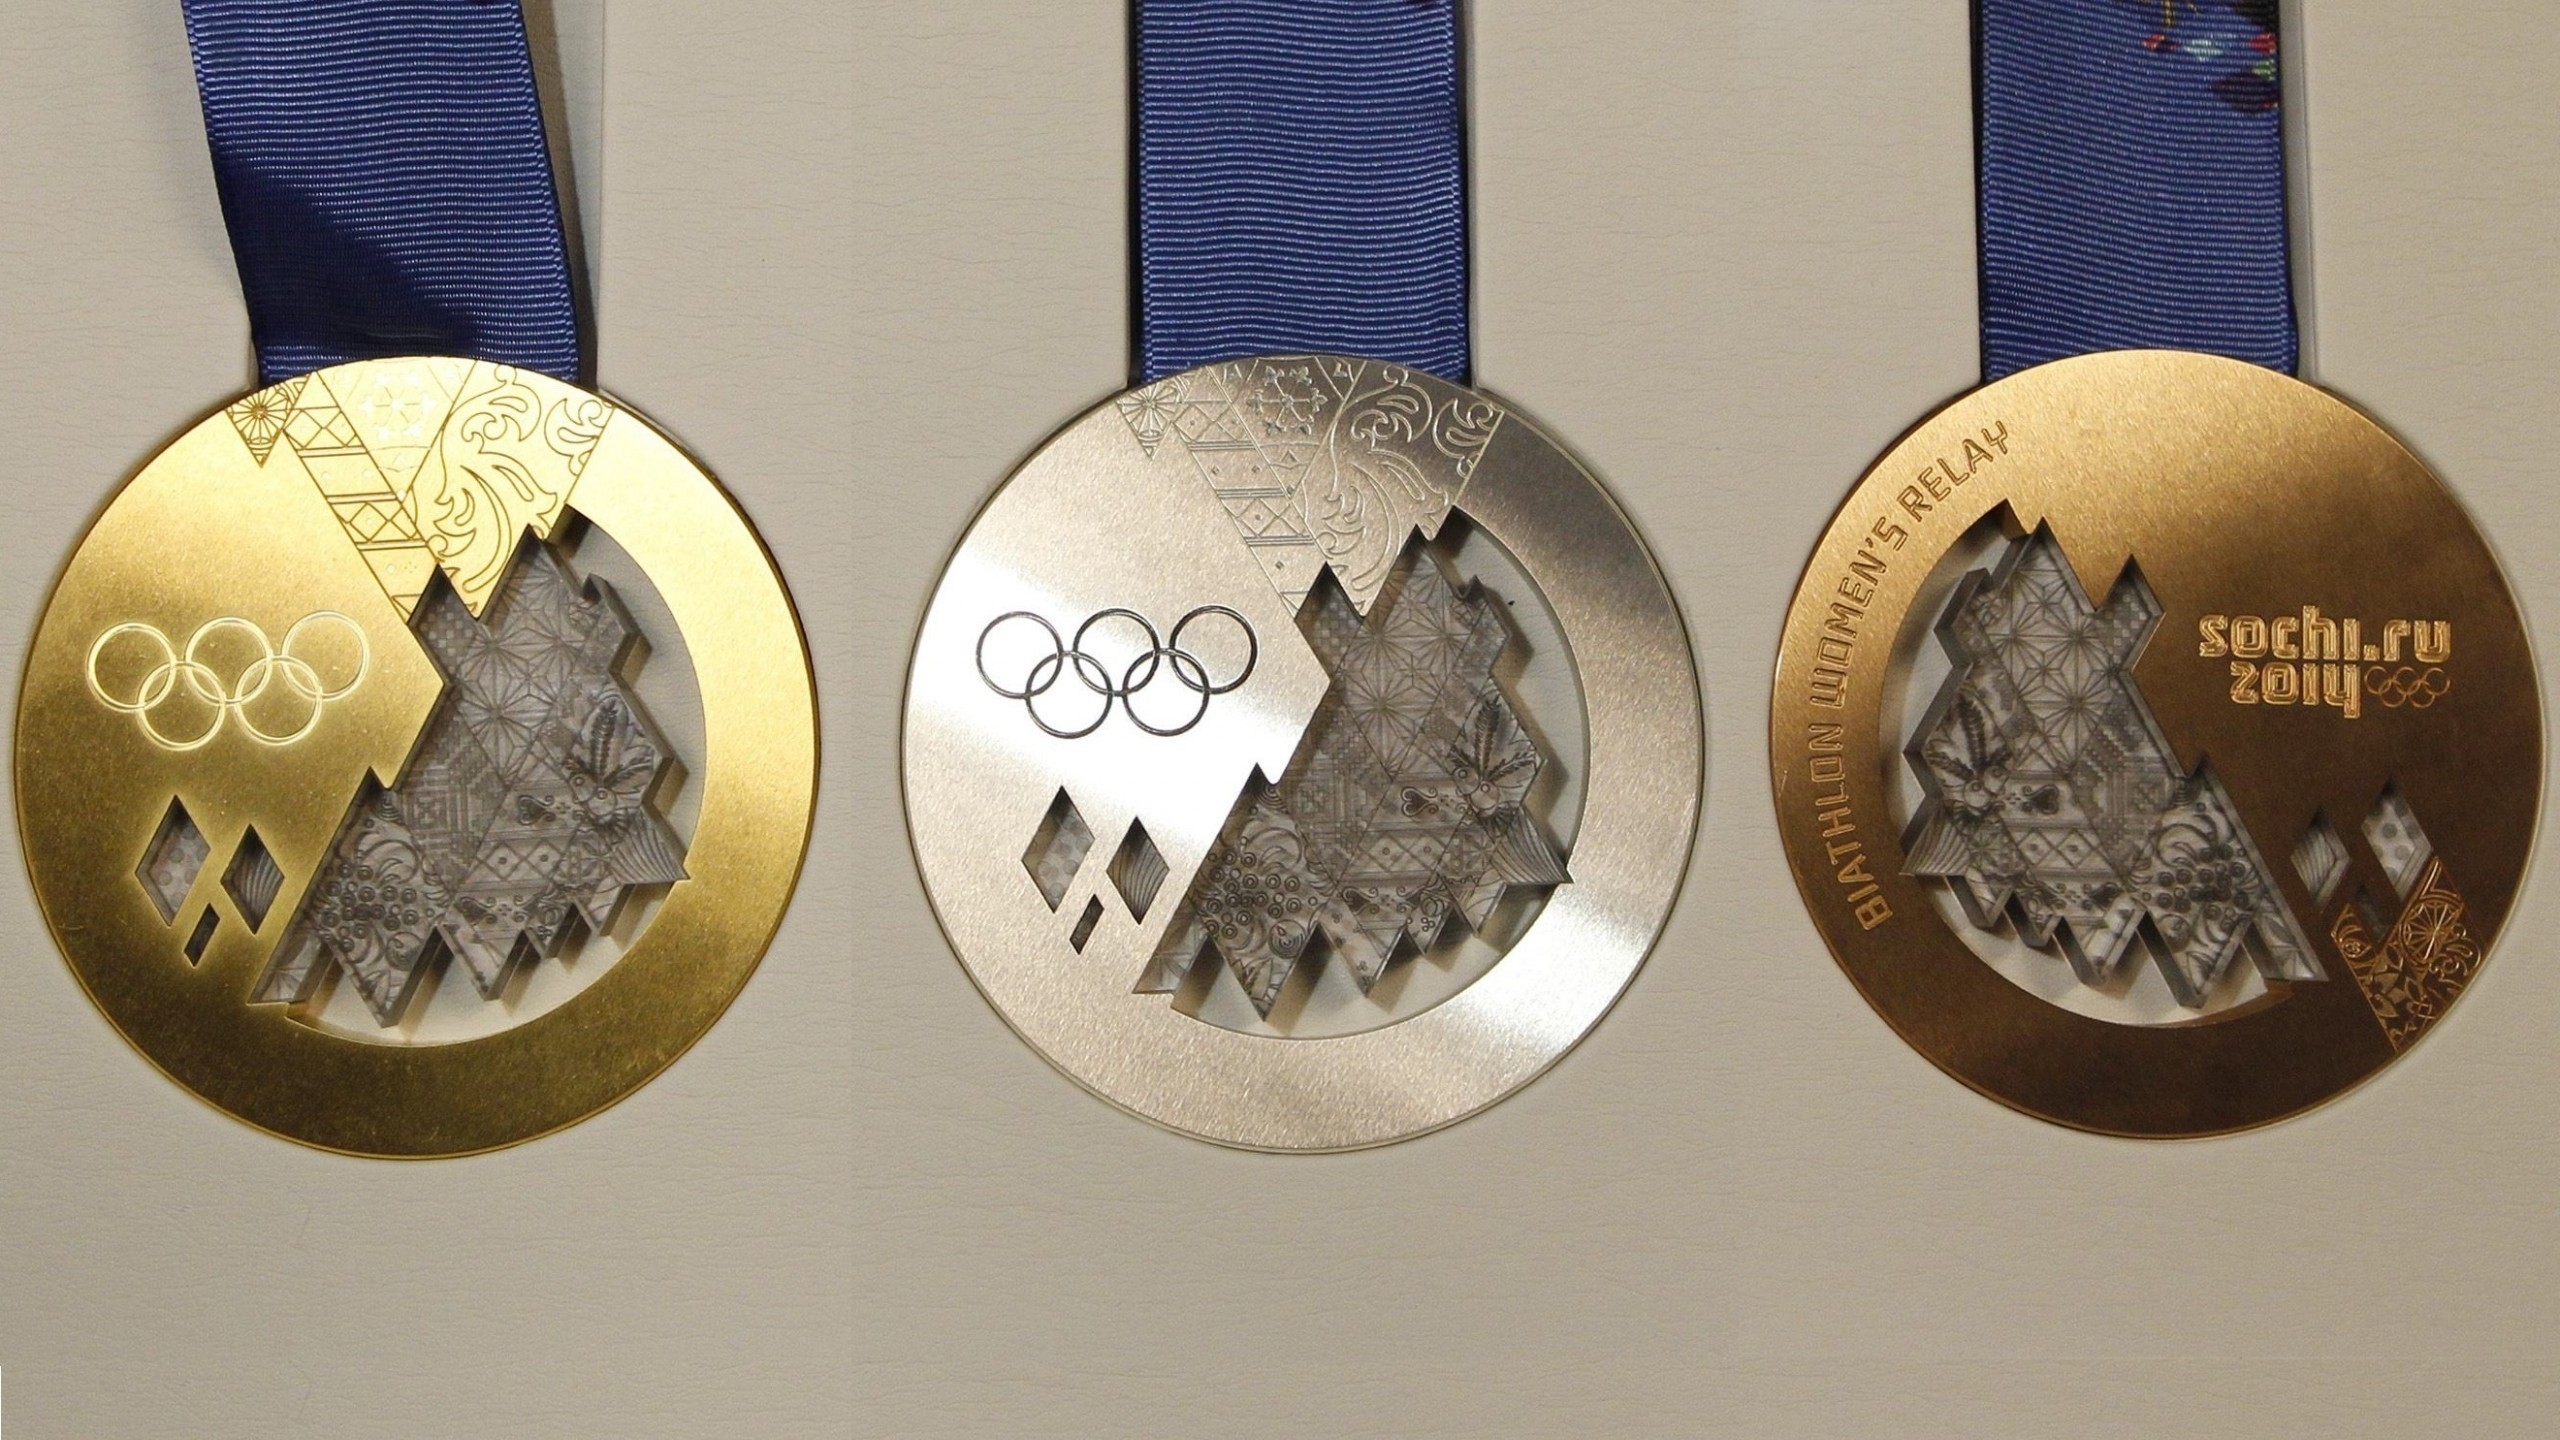 Sochi 2014 Medals for 2560x1440 HDTV resolution